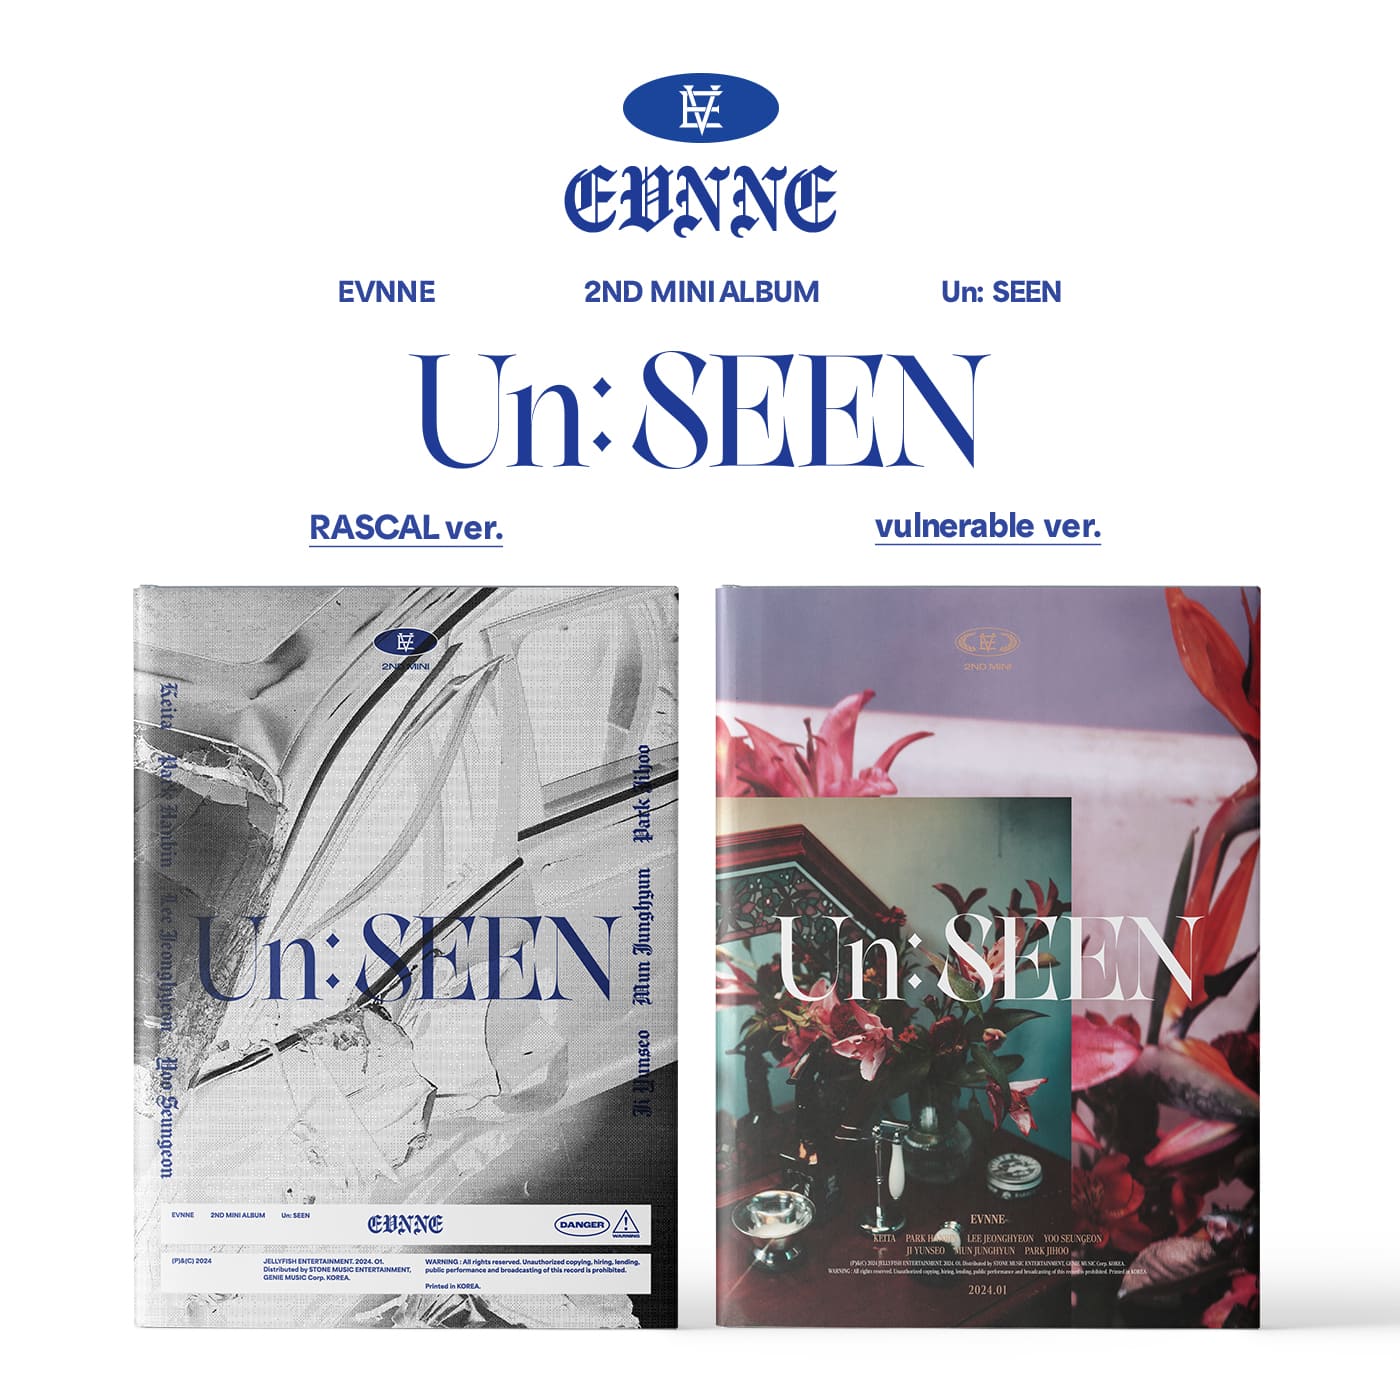 EVNNE [Un: SEEN] 2nd Mini Album